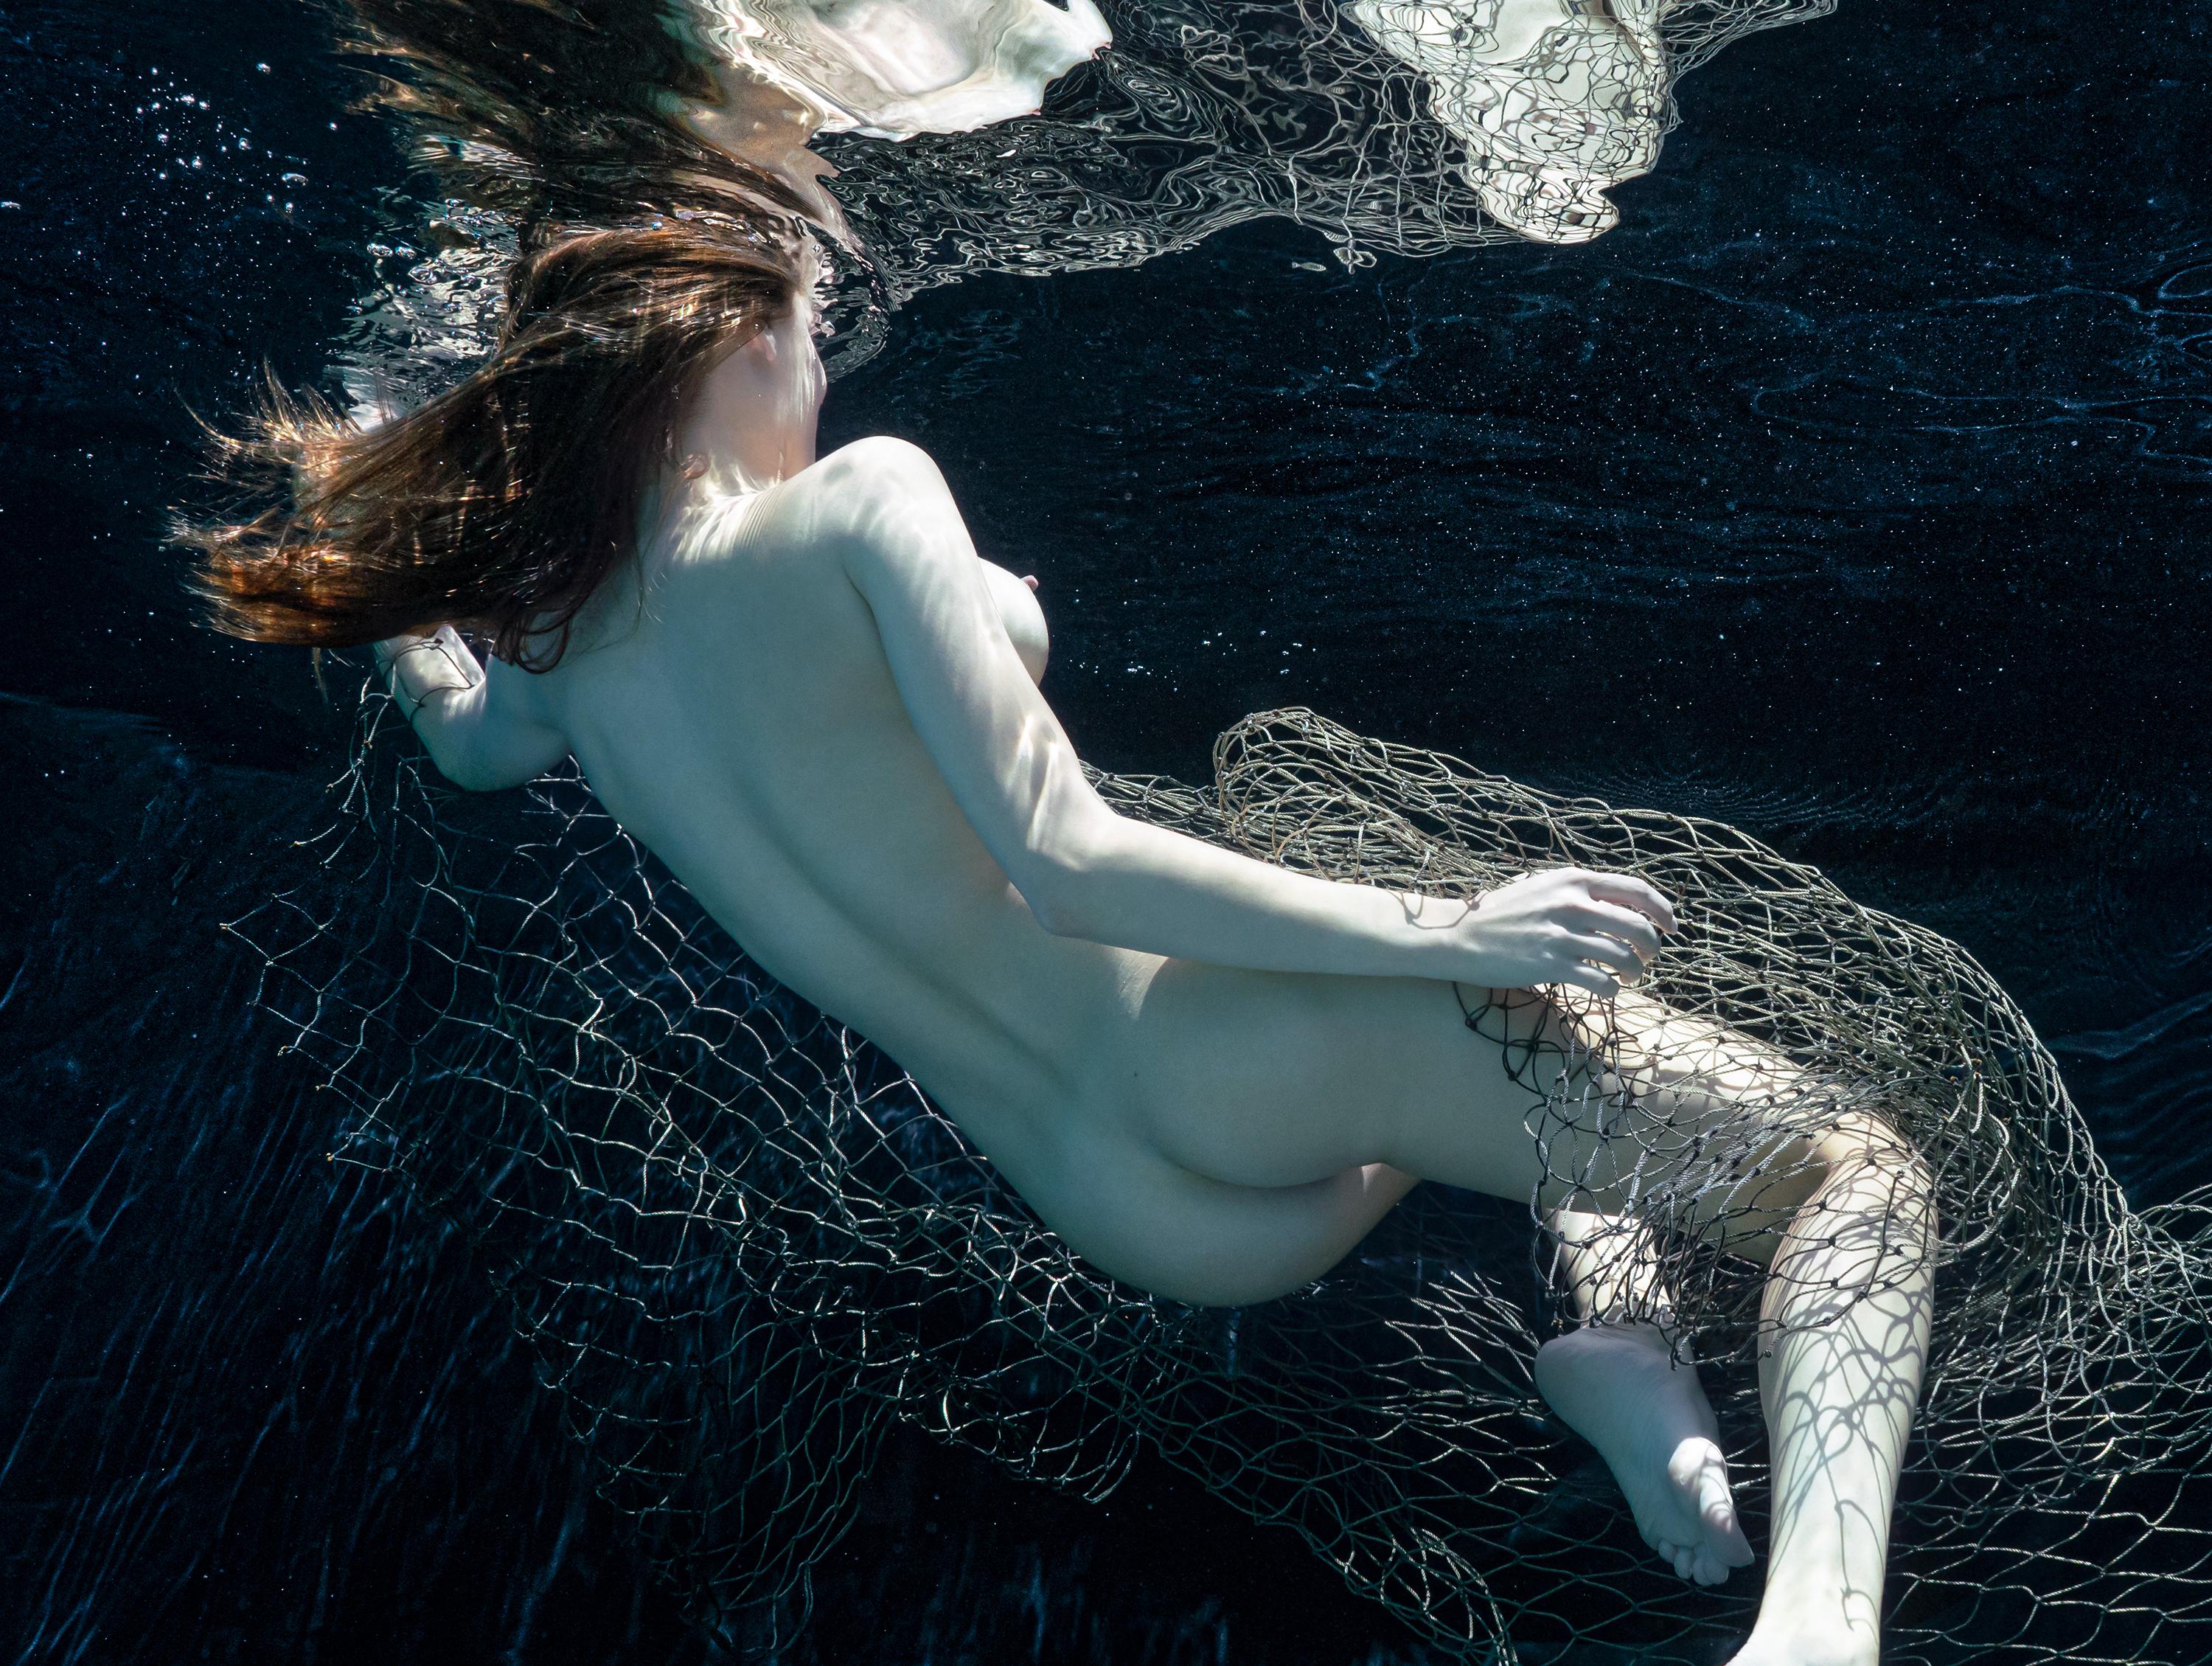 Constellation - underwater nude photograph - archival pigment print 35